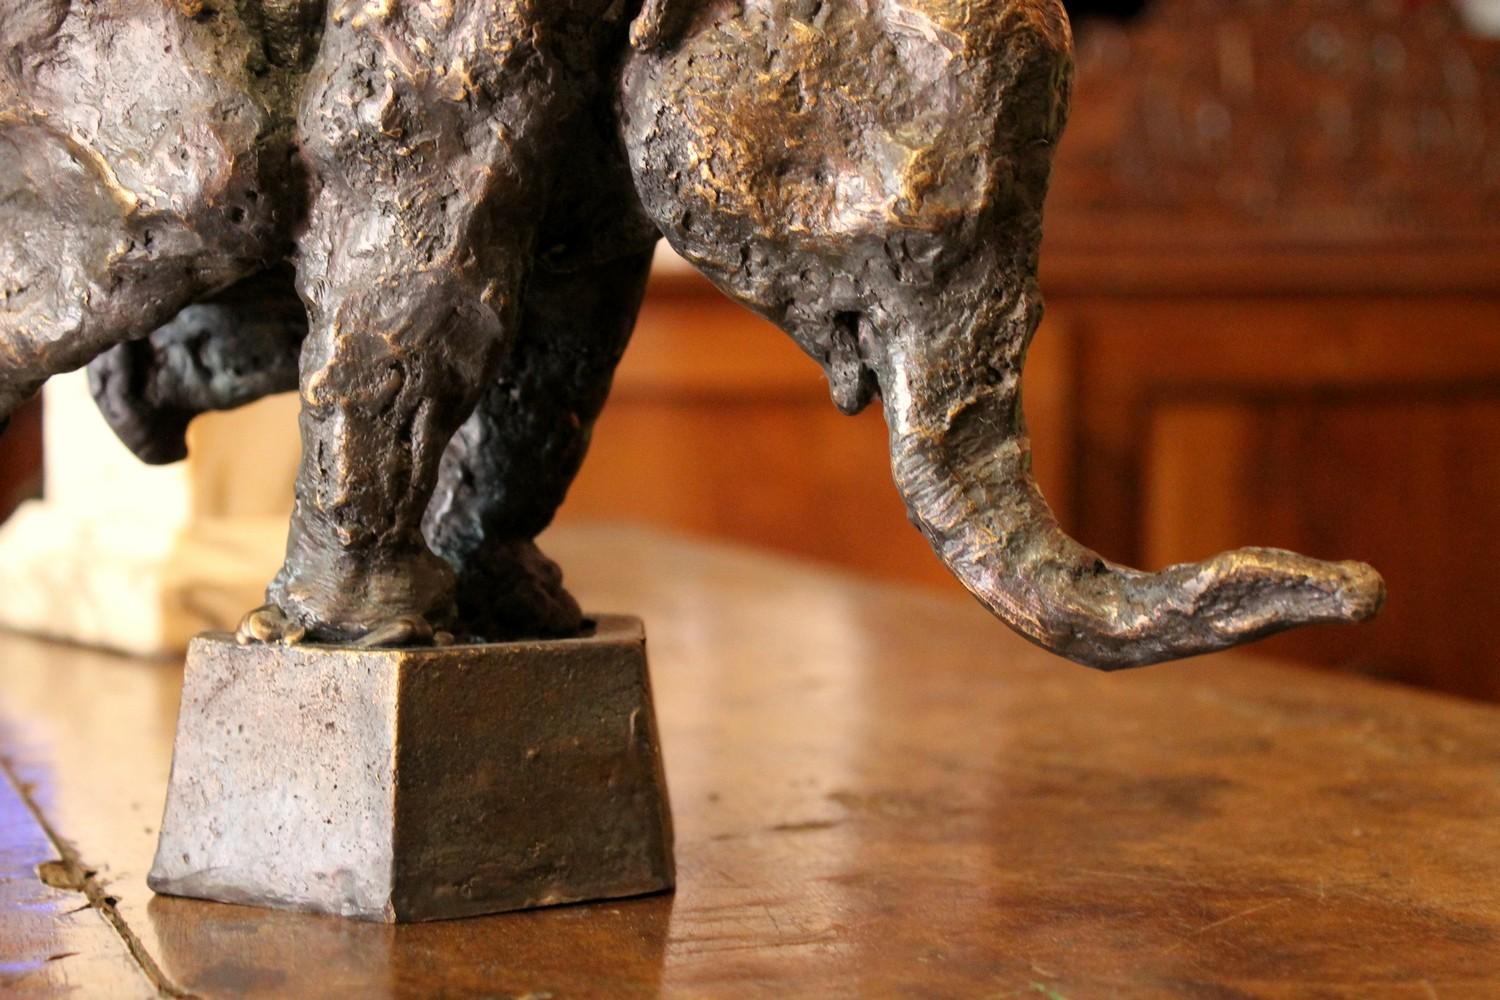 Elephant on Iron Pedestal, Lost Wax Casting Parcel-Gilt Patina Bronze Sculpture For Sale 1